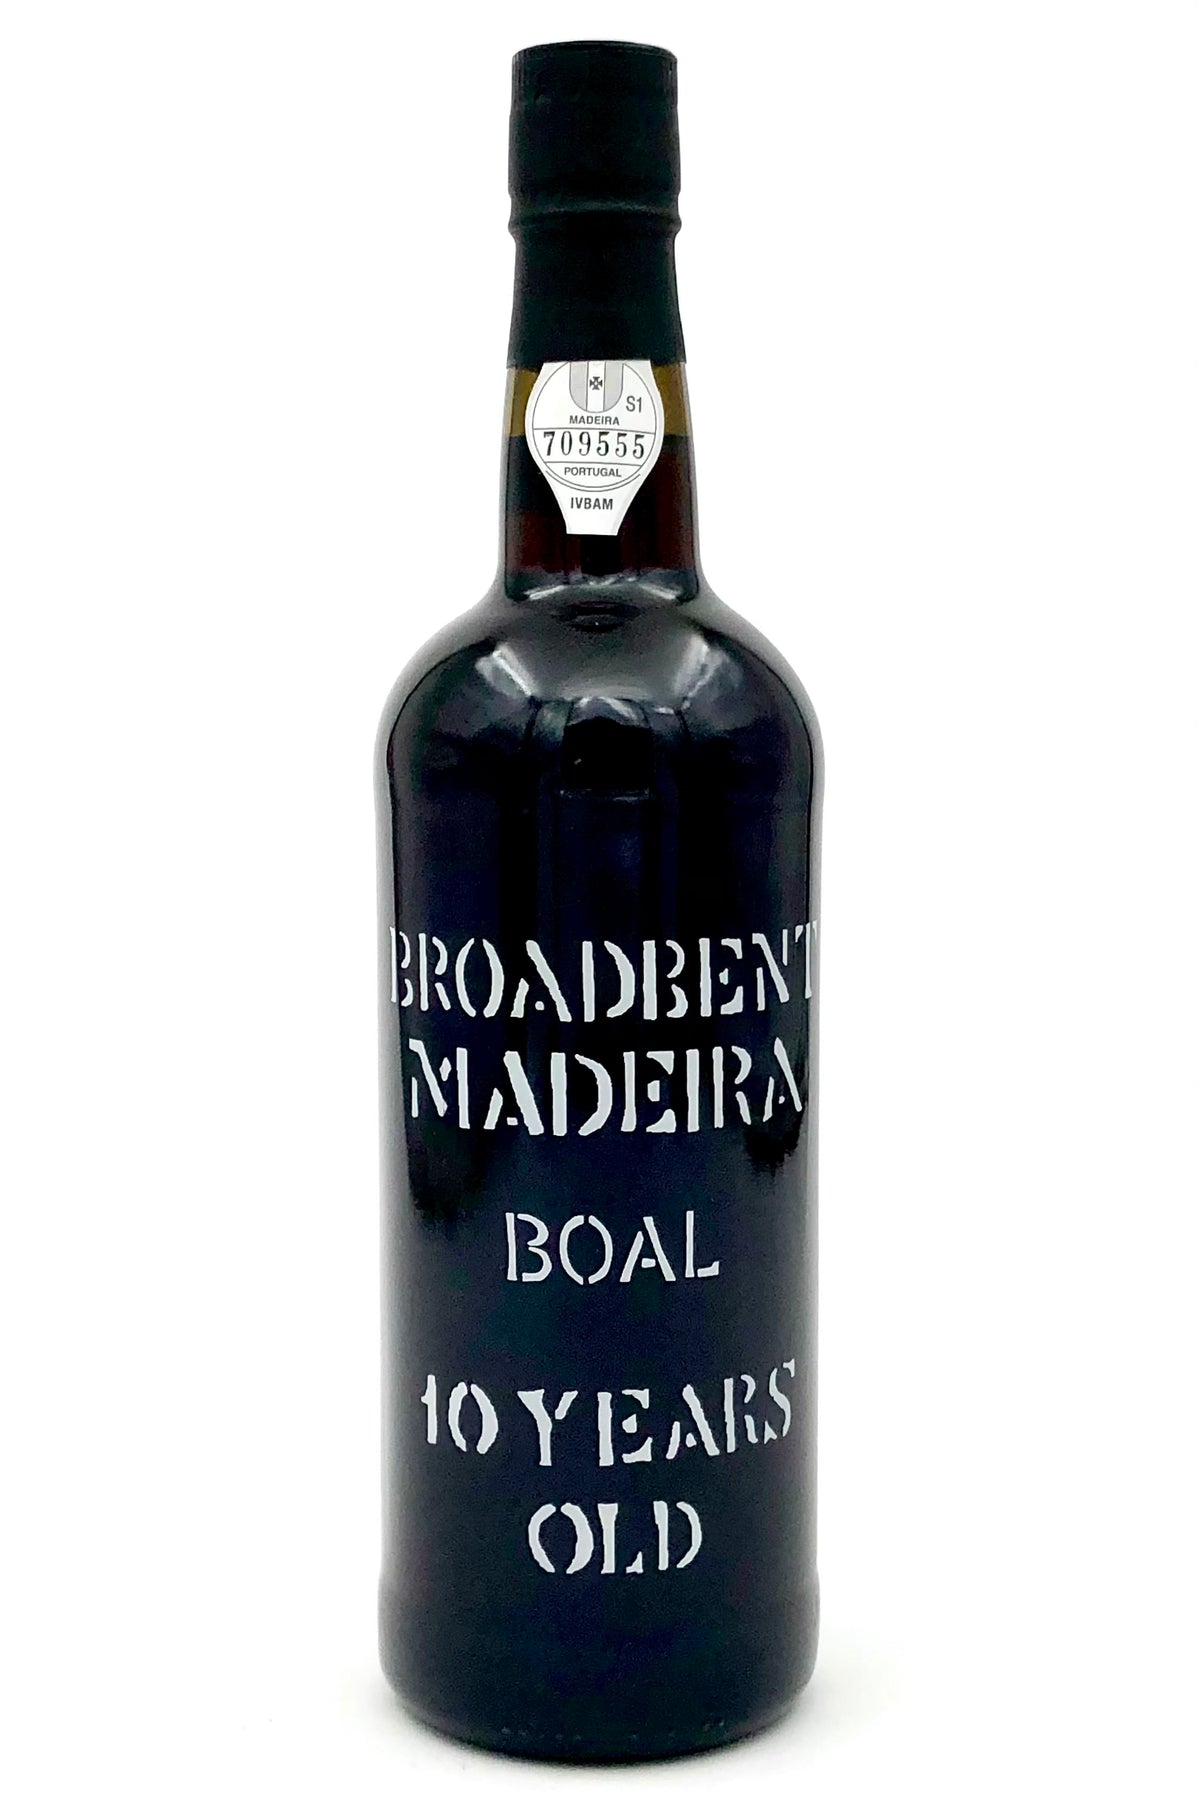 Broadbent 10 Year Old Boal Madeira